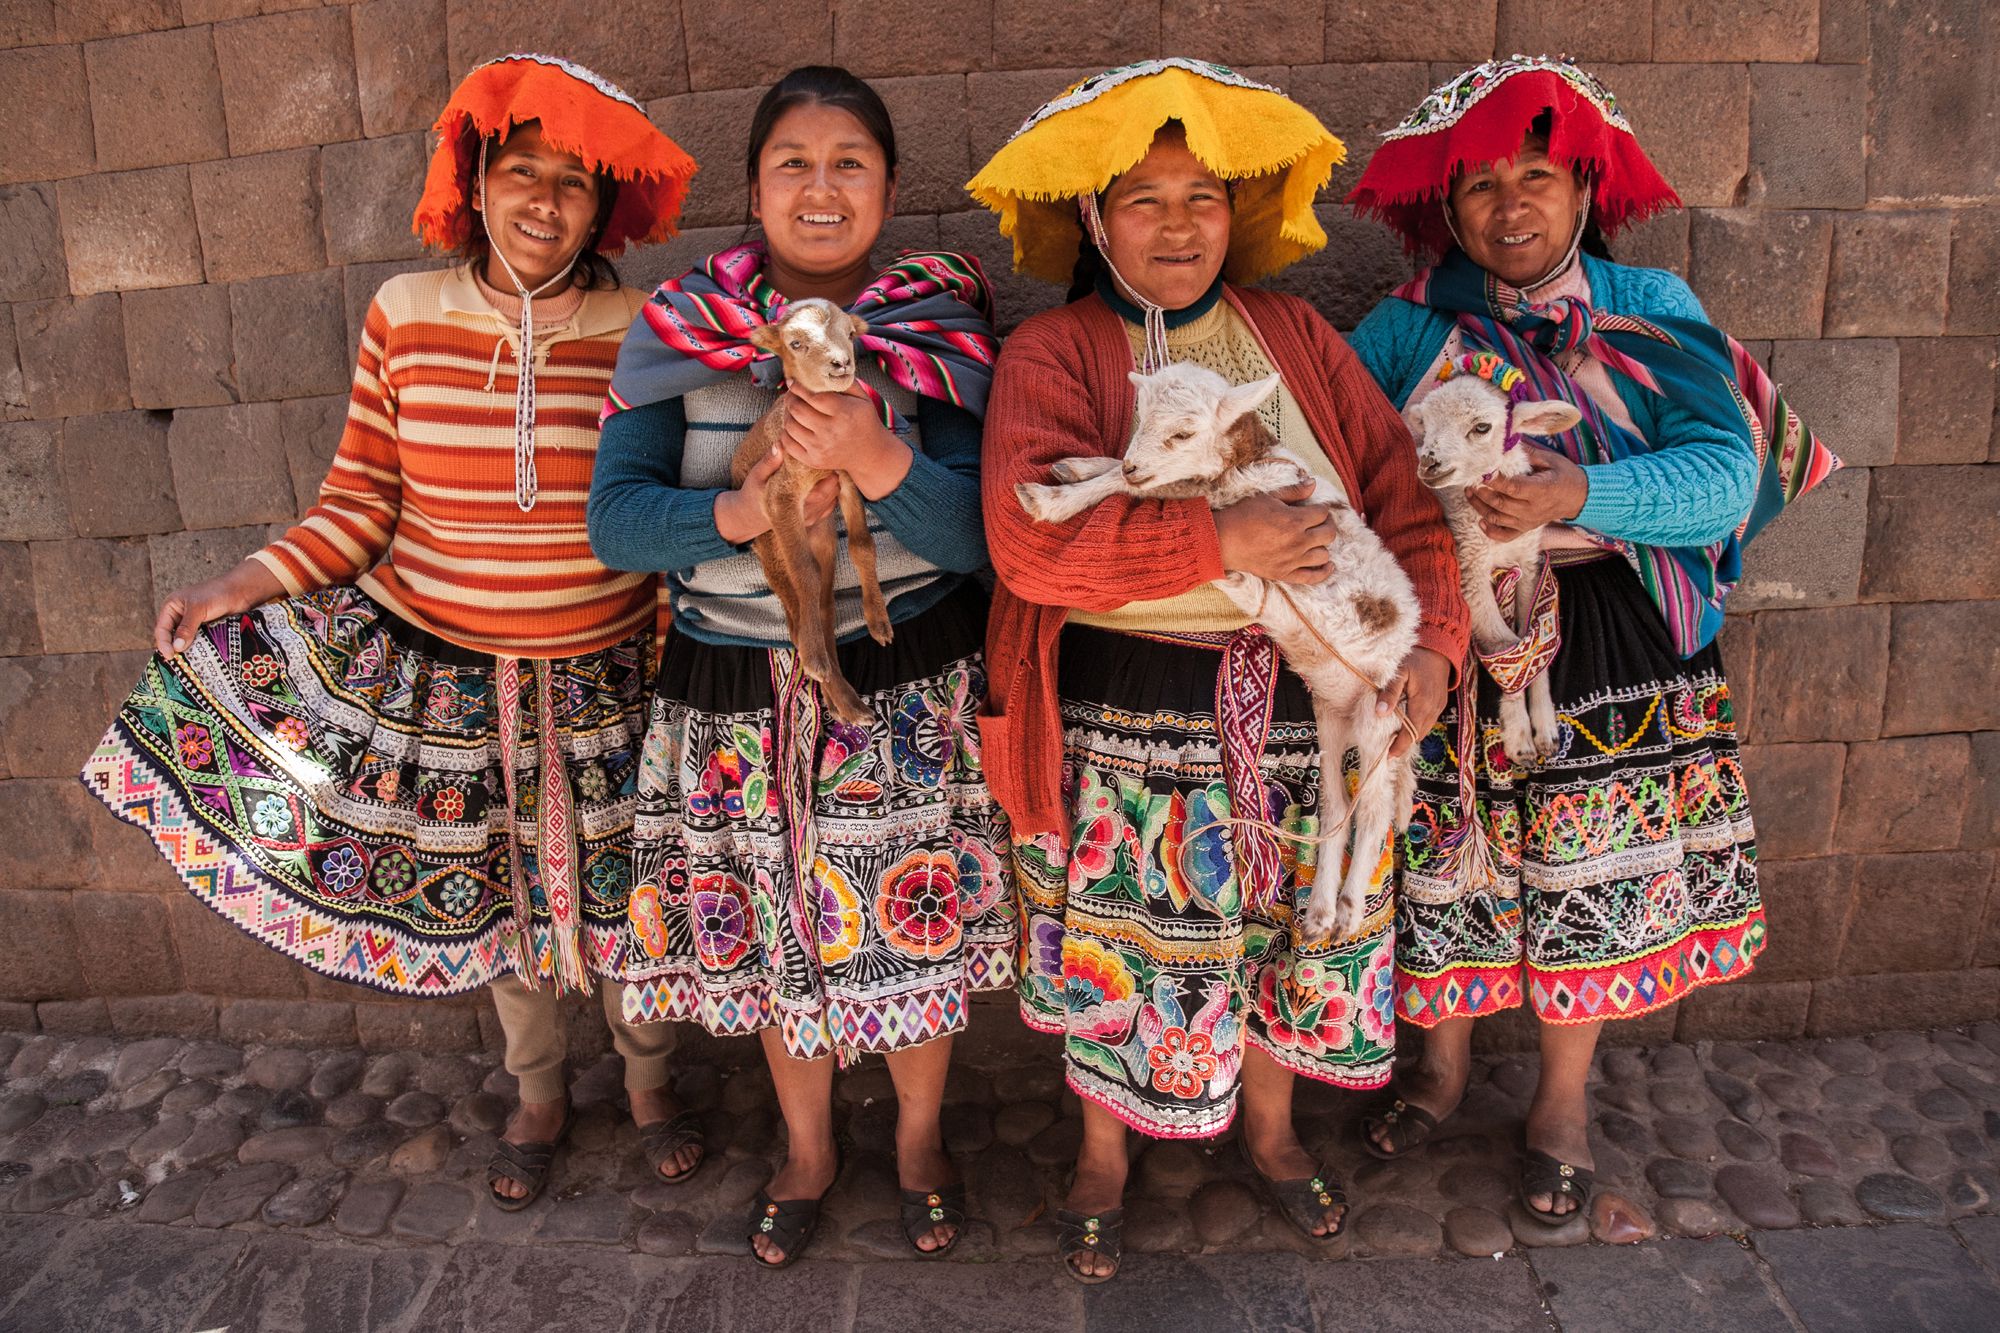 Пестрый народ. Индейцы кечуа в Перу. Индейцы аймара. Индейцы кечуа в Эквадоре. Индейцы кечуа и аймара.